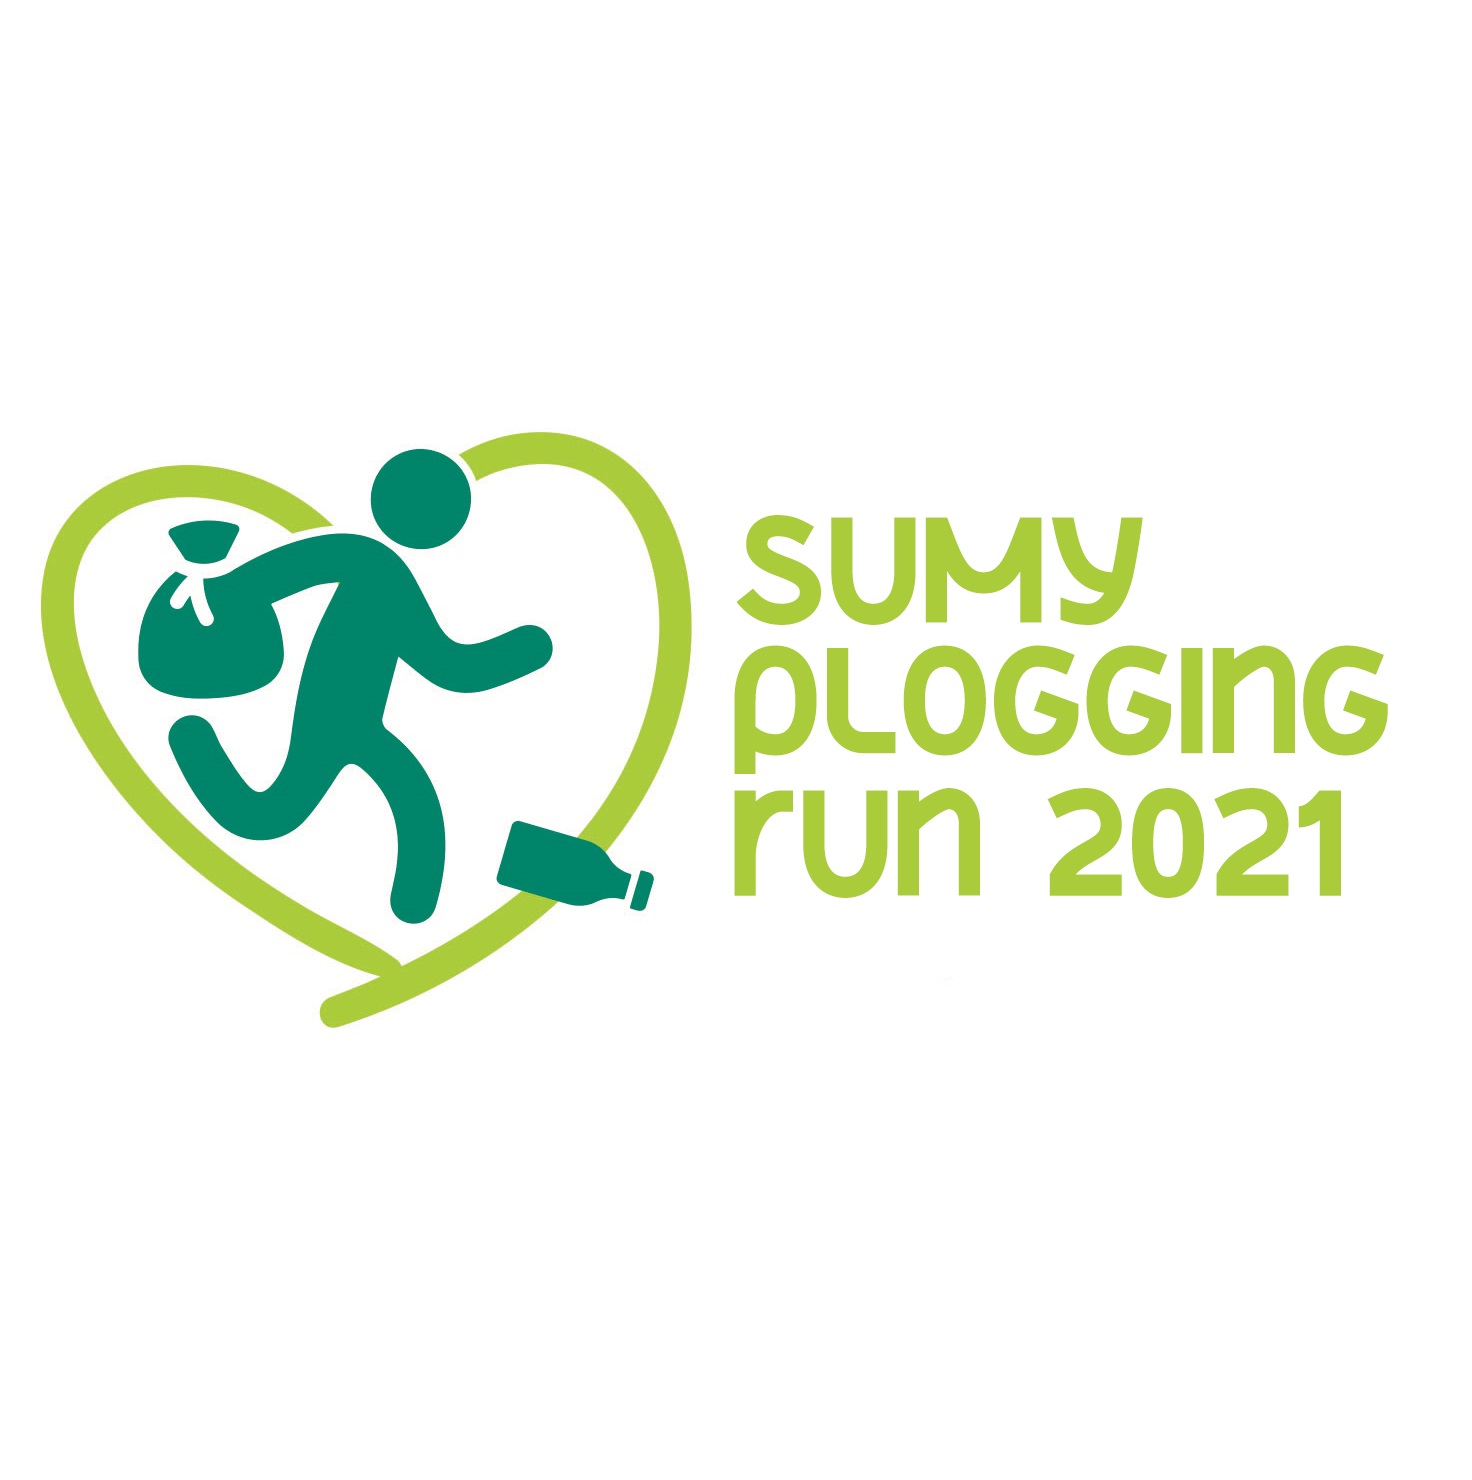 Sumy Plogging run 